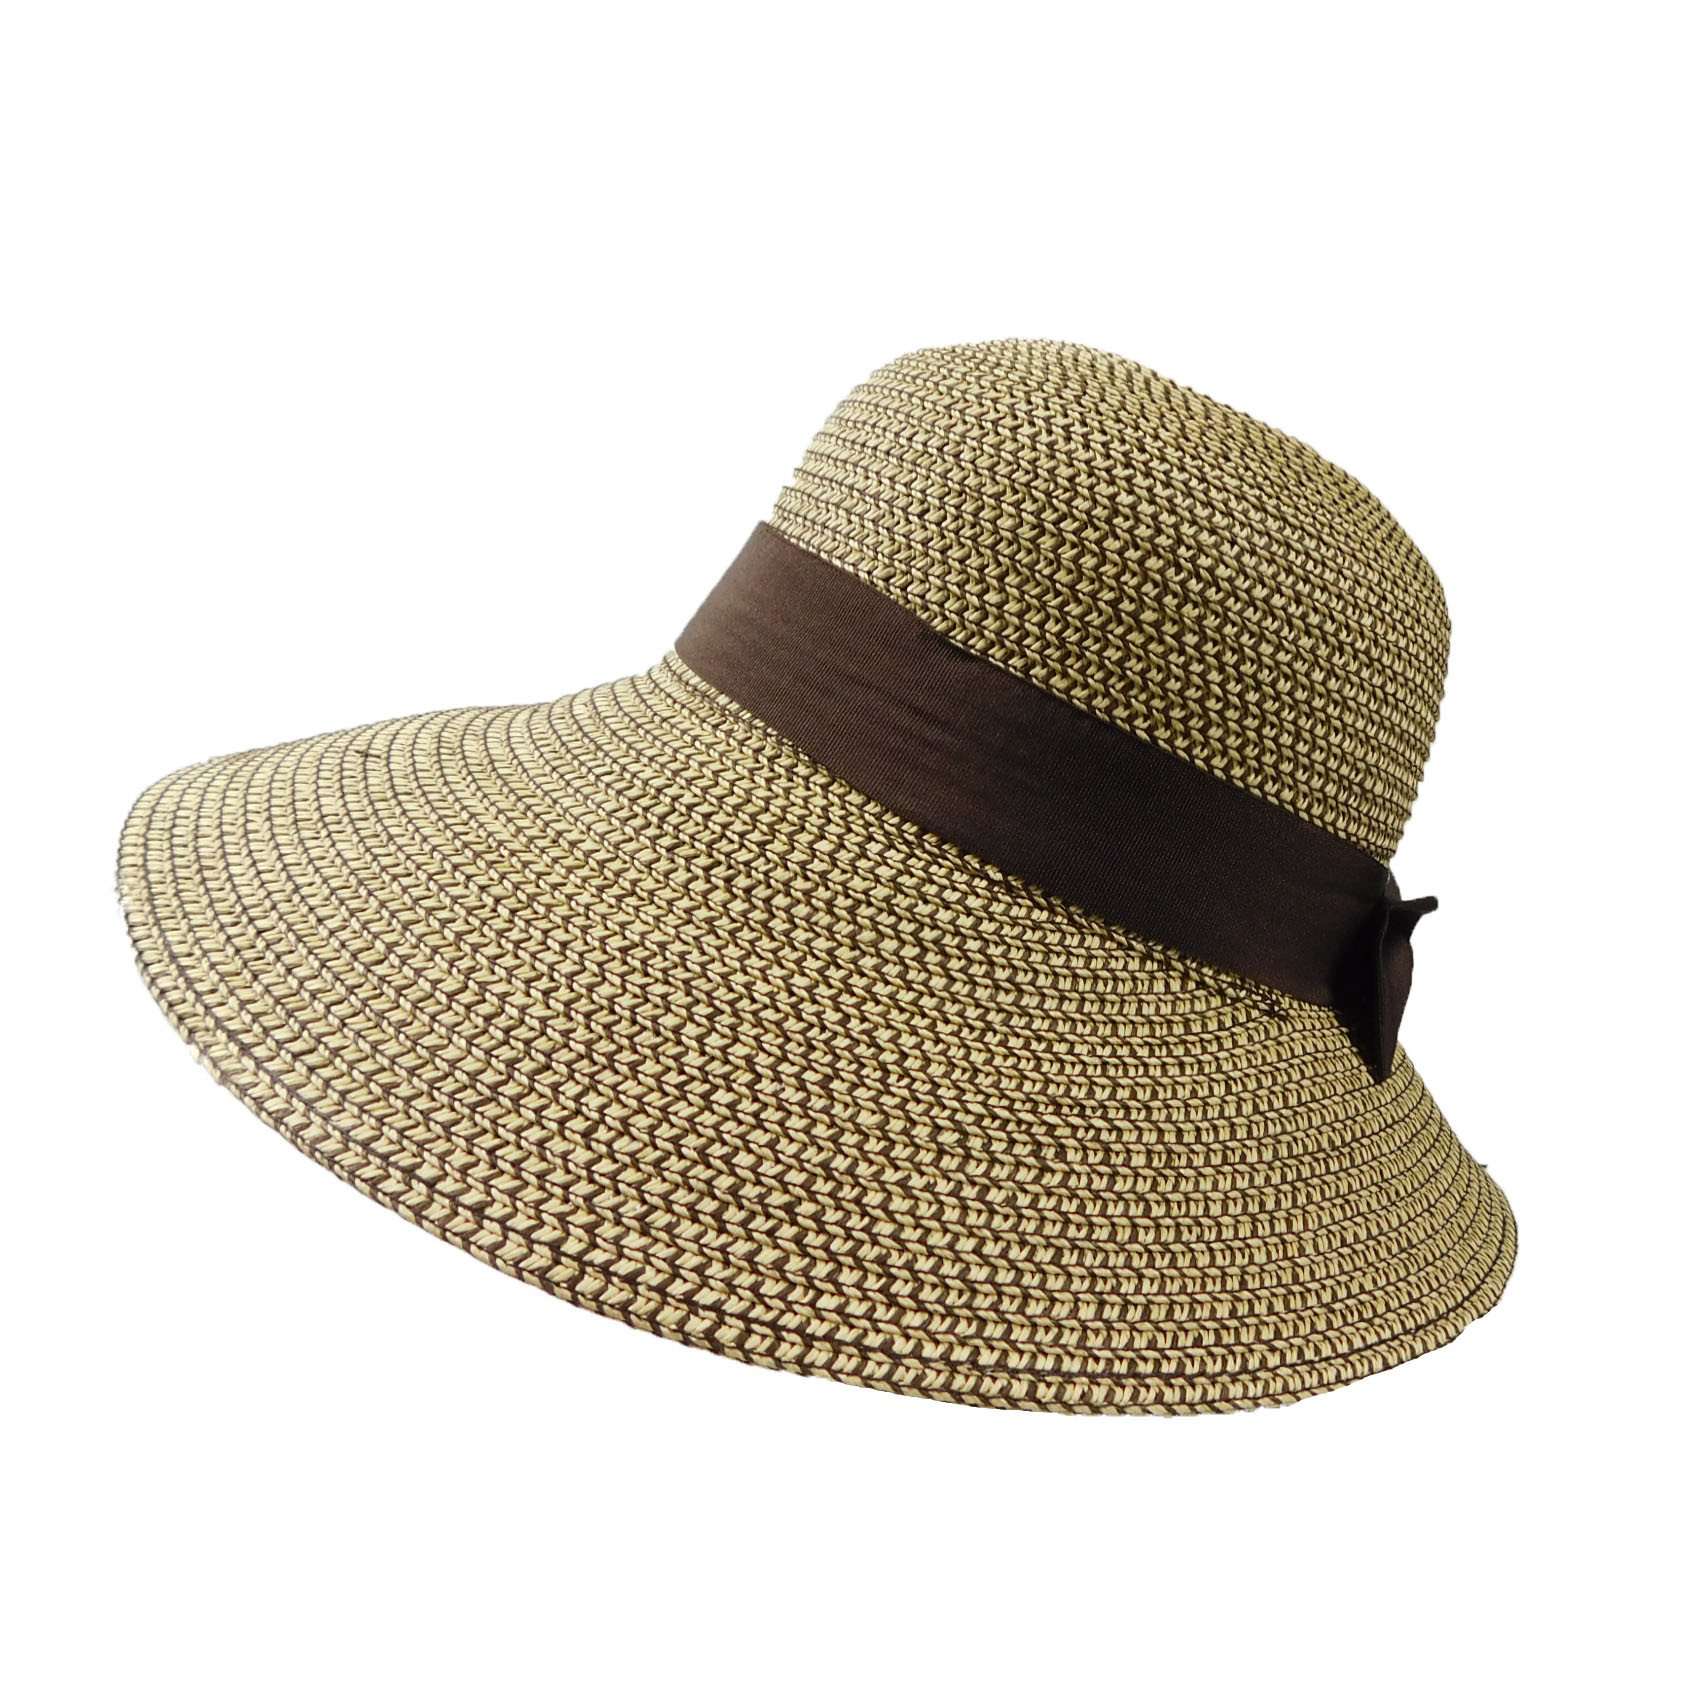 Downturned Big Brim Asymmetrical Summer Hat Wide Brim Hat JEL WSPS608BN Brown tweed  